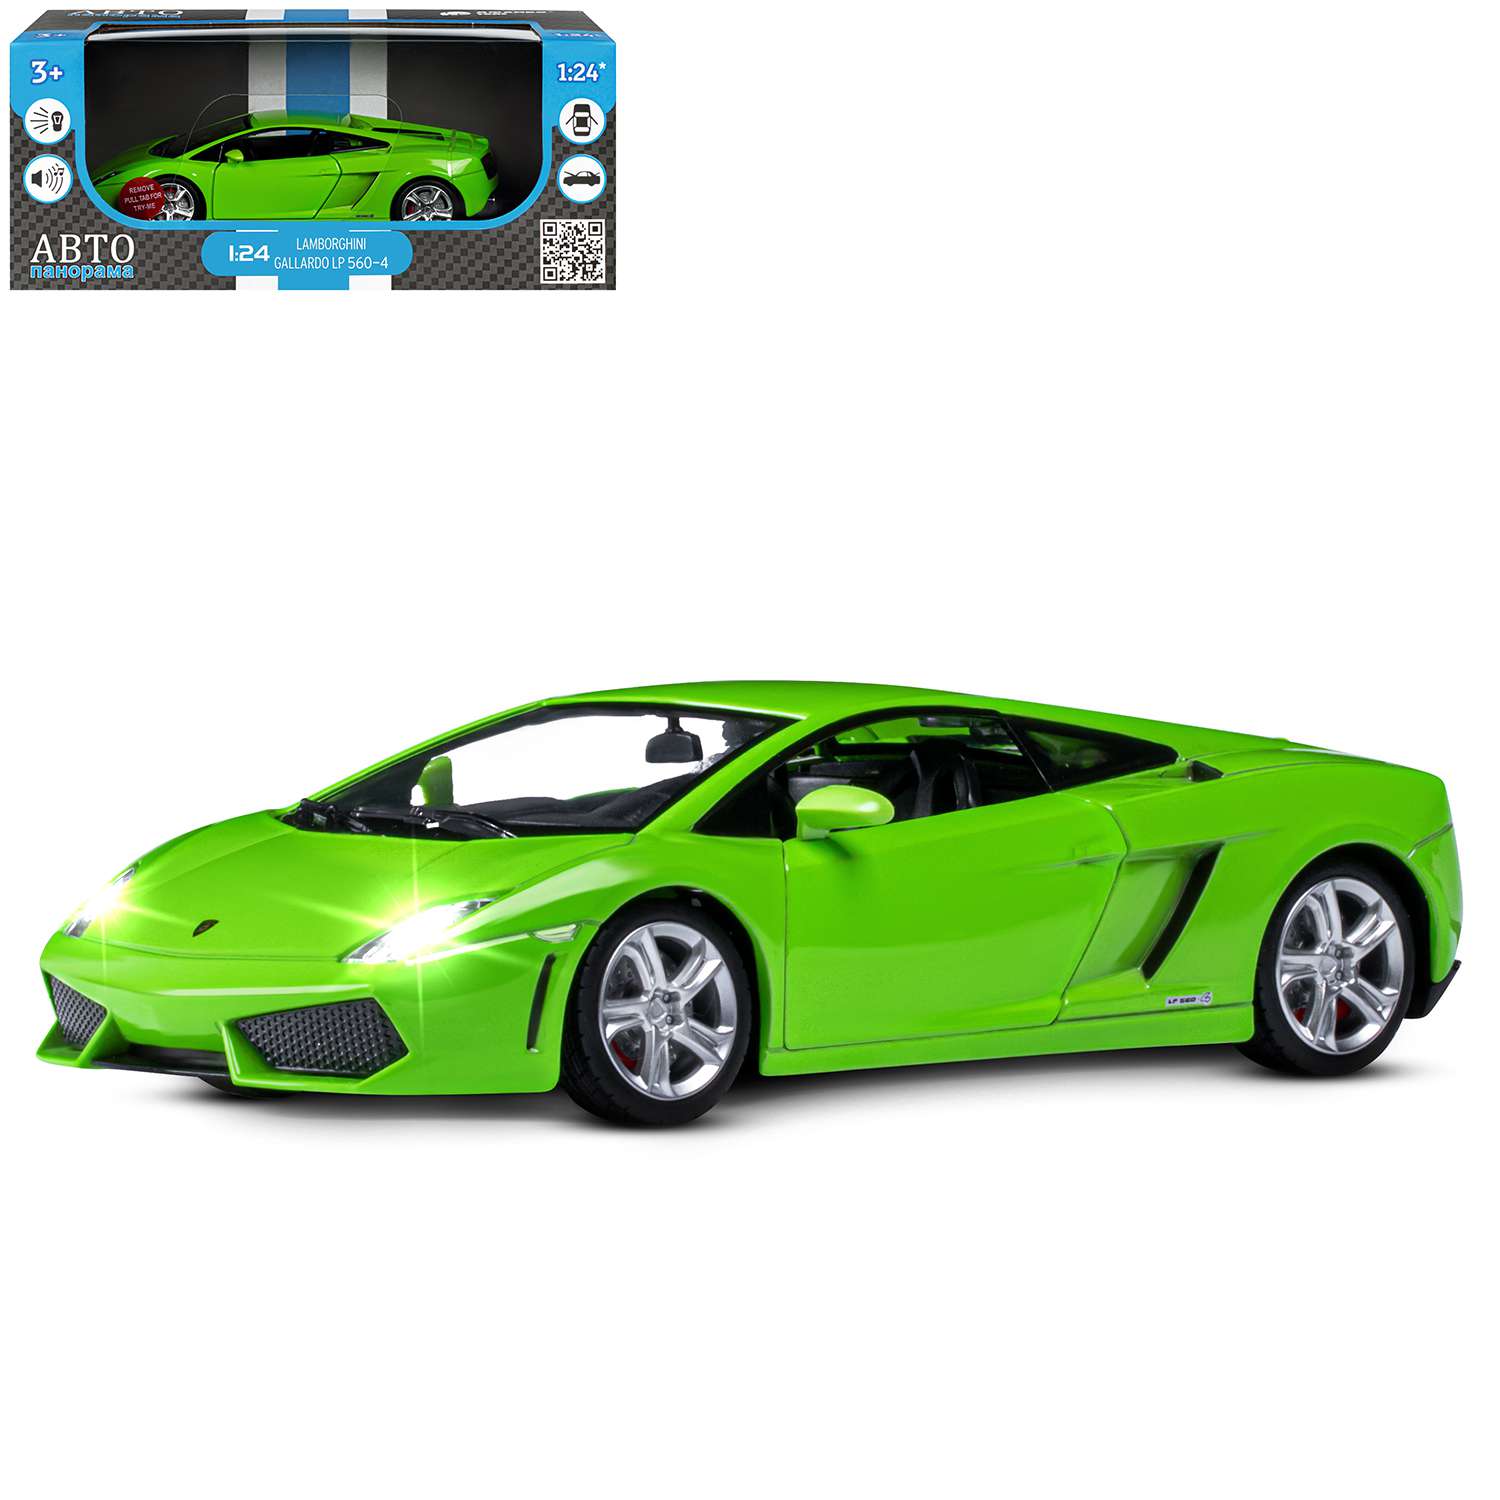 Машина JB1251382 Lamborghini Gallardo LP560-4 металл 1:24 зеленый свет, звук ТМ Автопанорама - Москва 